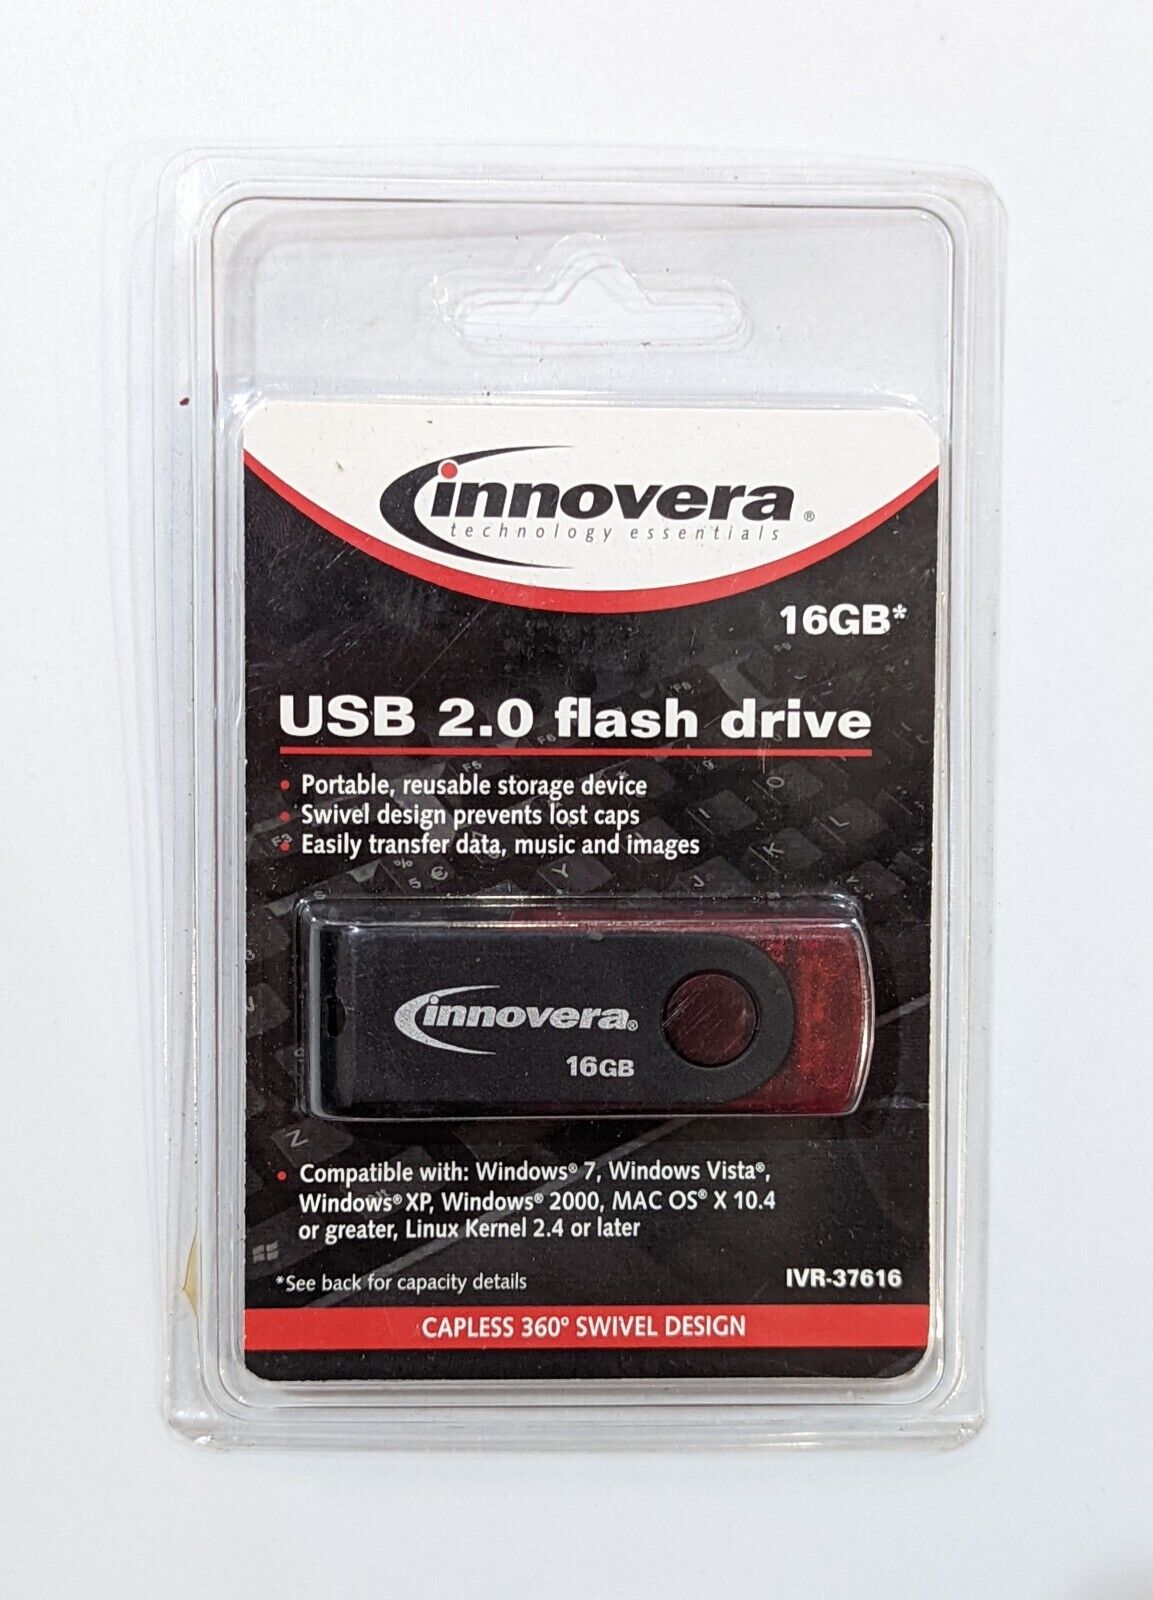 Innovera Technology Essentials USB 2.0 Flash Drive 16GB